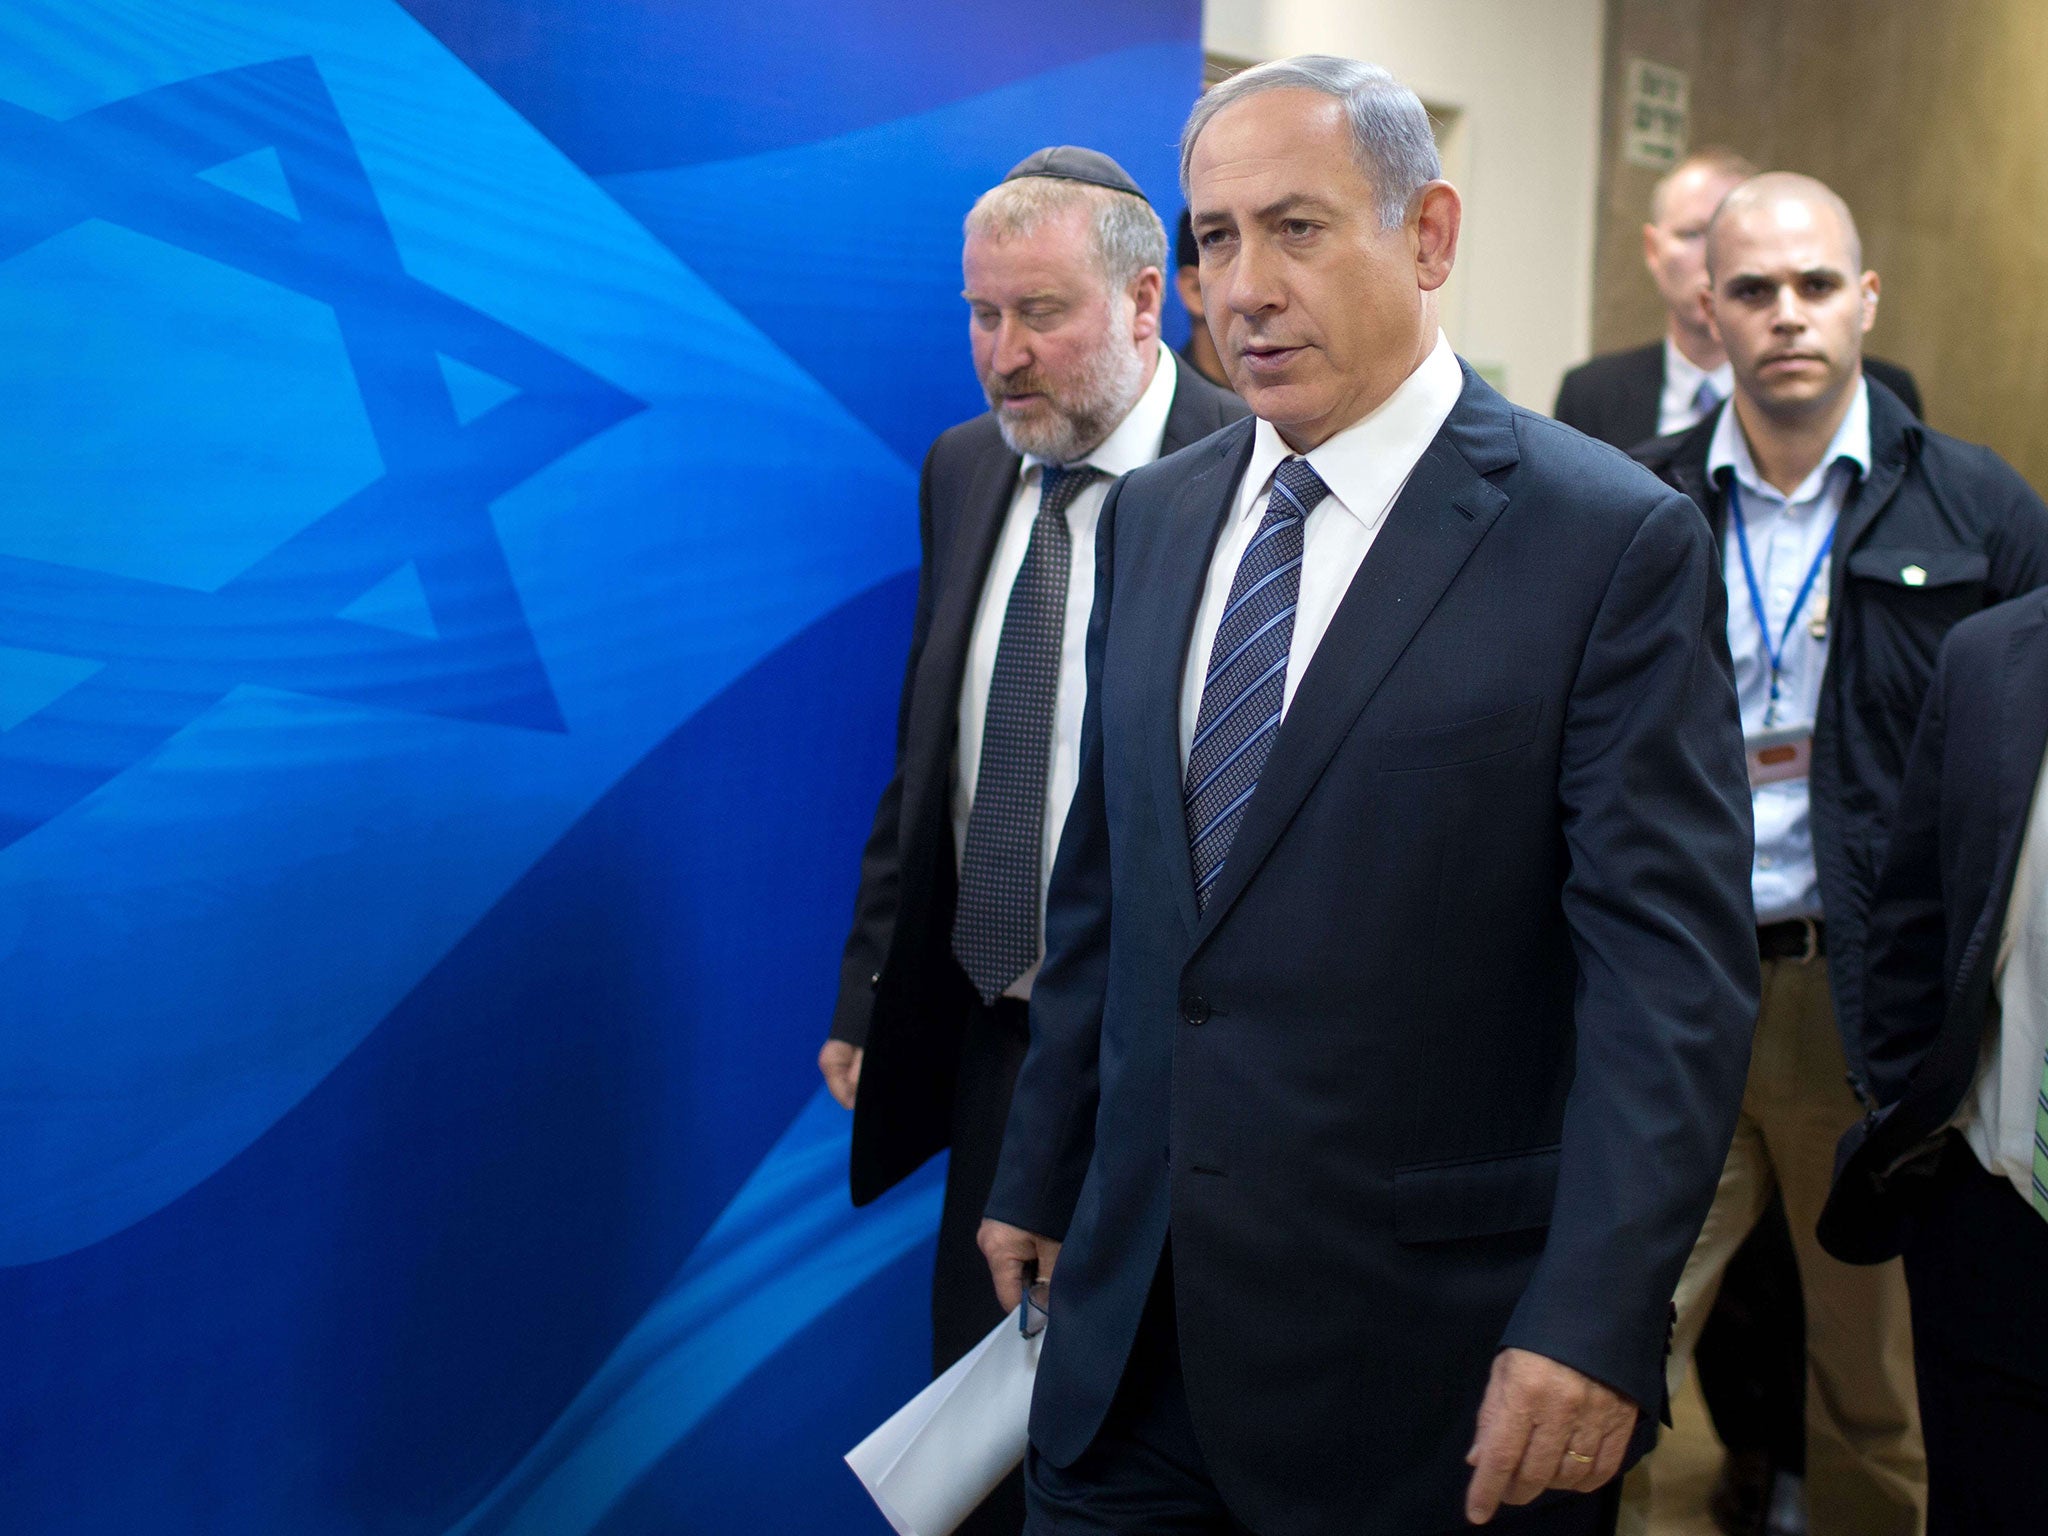 Israeli Prime Minister Benjamin Netanyahu arrives for the weekly cabinet meeting at his office in Jerusalem on September 6, 2015